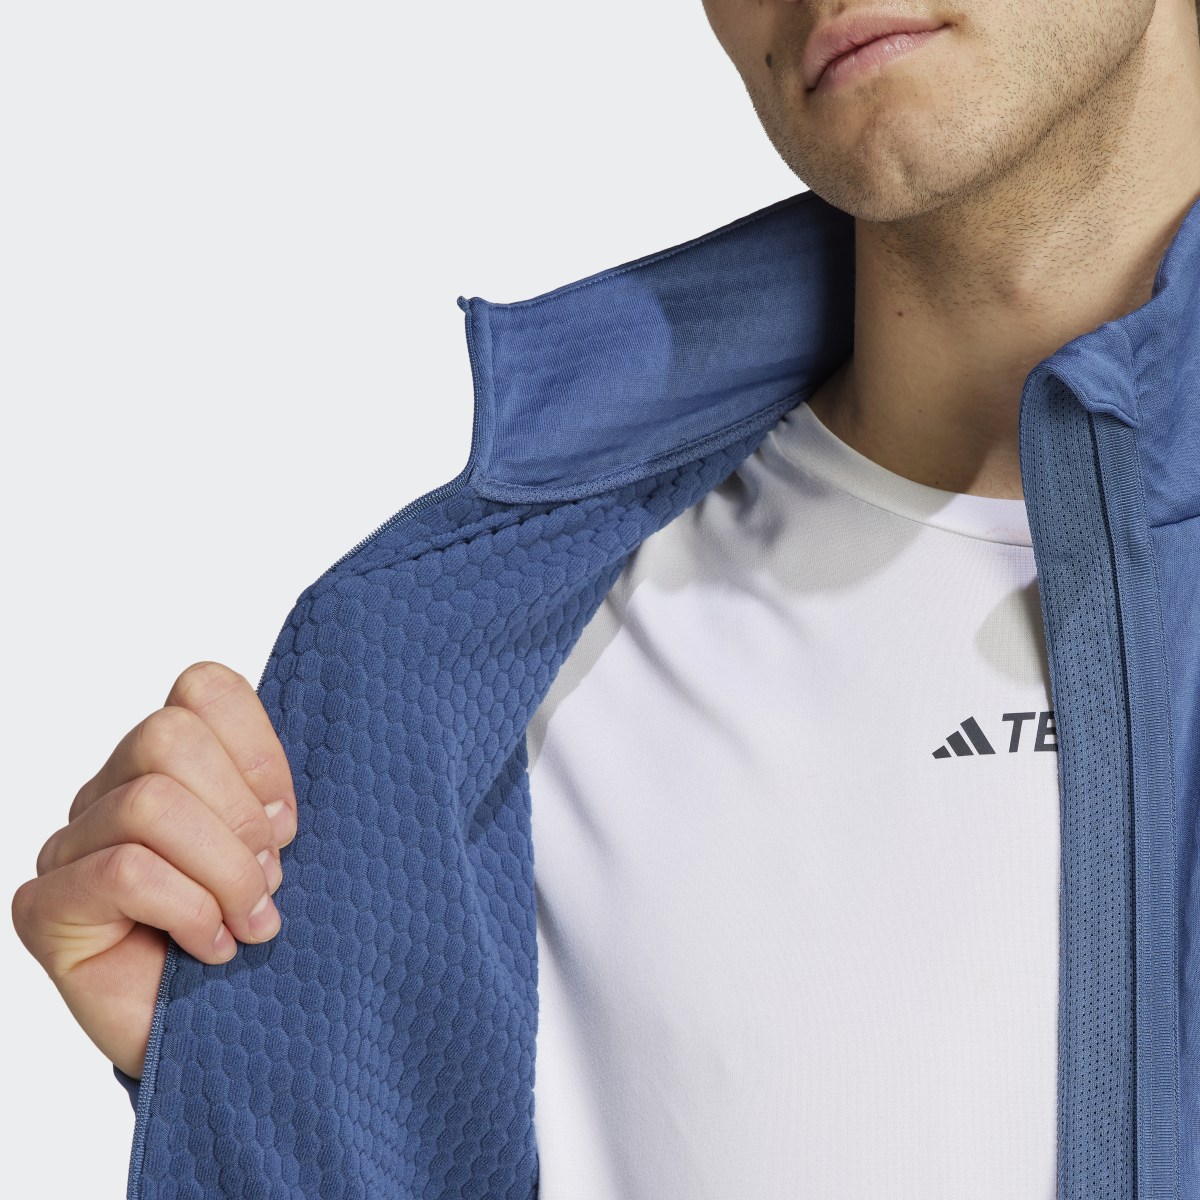 Adidas Terrex Multi Light Fleece Full-Zip Jacket. 7